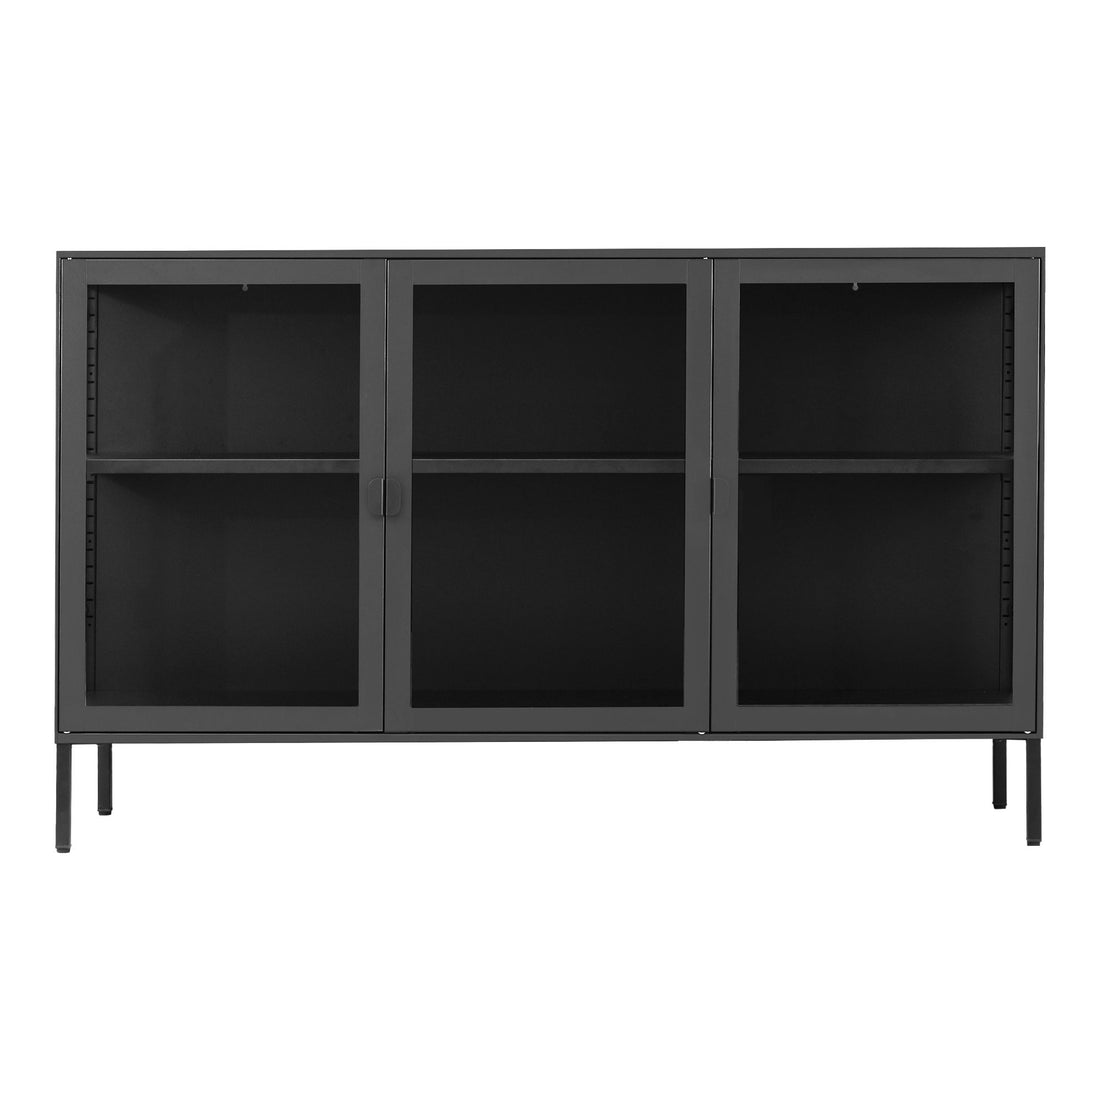 Brisbane sideboard - display cabinet in black with glass doors 40x140x85 cm